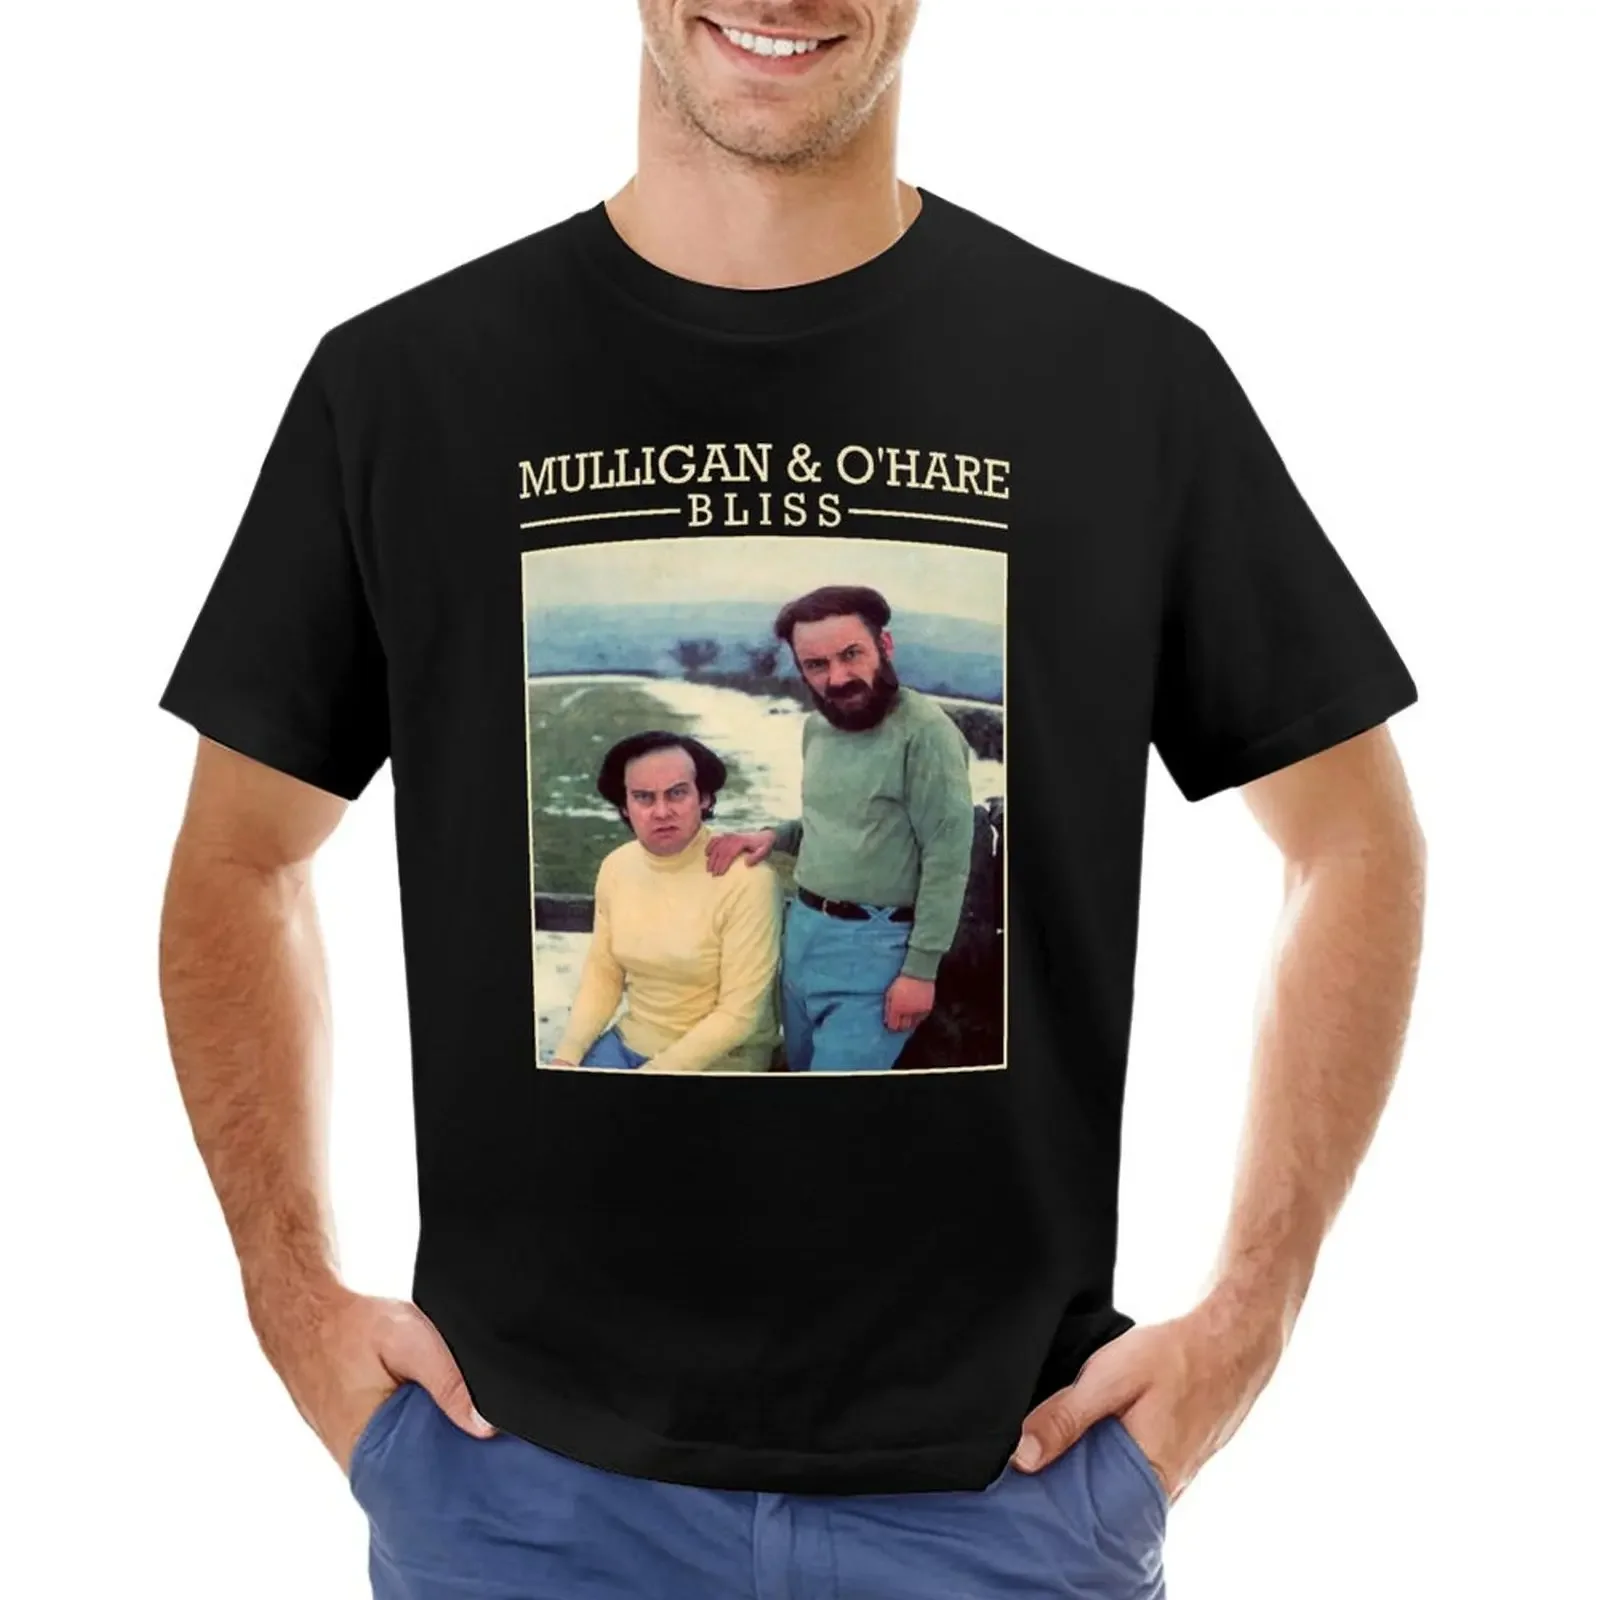 

MULLIGAN & O'HARE T-shirt cute clothes funnys mens graphic t-shirts big and tall